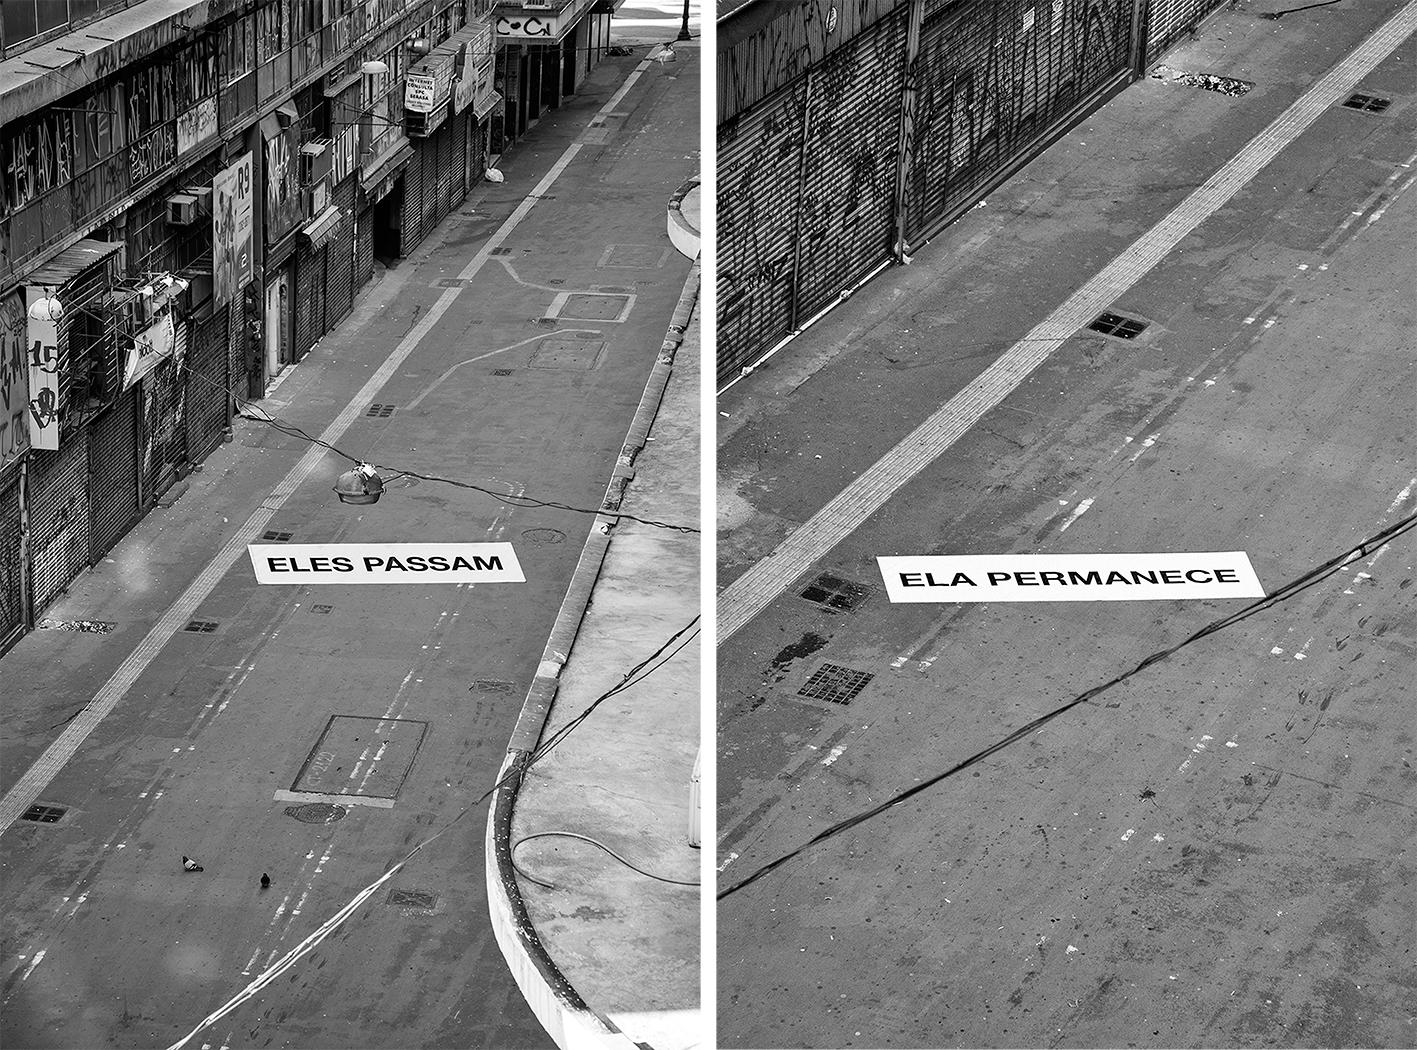 Guilherme Licurgo Landscape Photograph - Manifesto XIII & Manifesto XIV. From the Manifesto series 